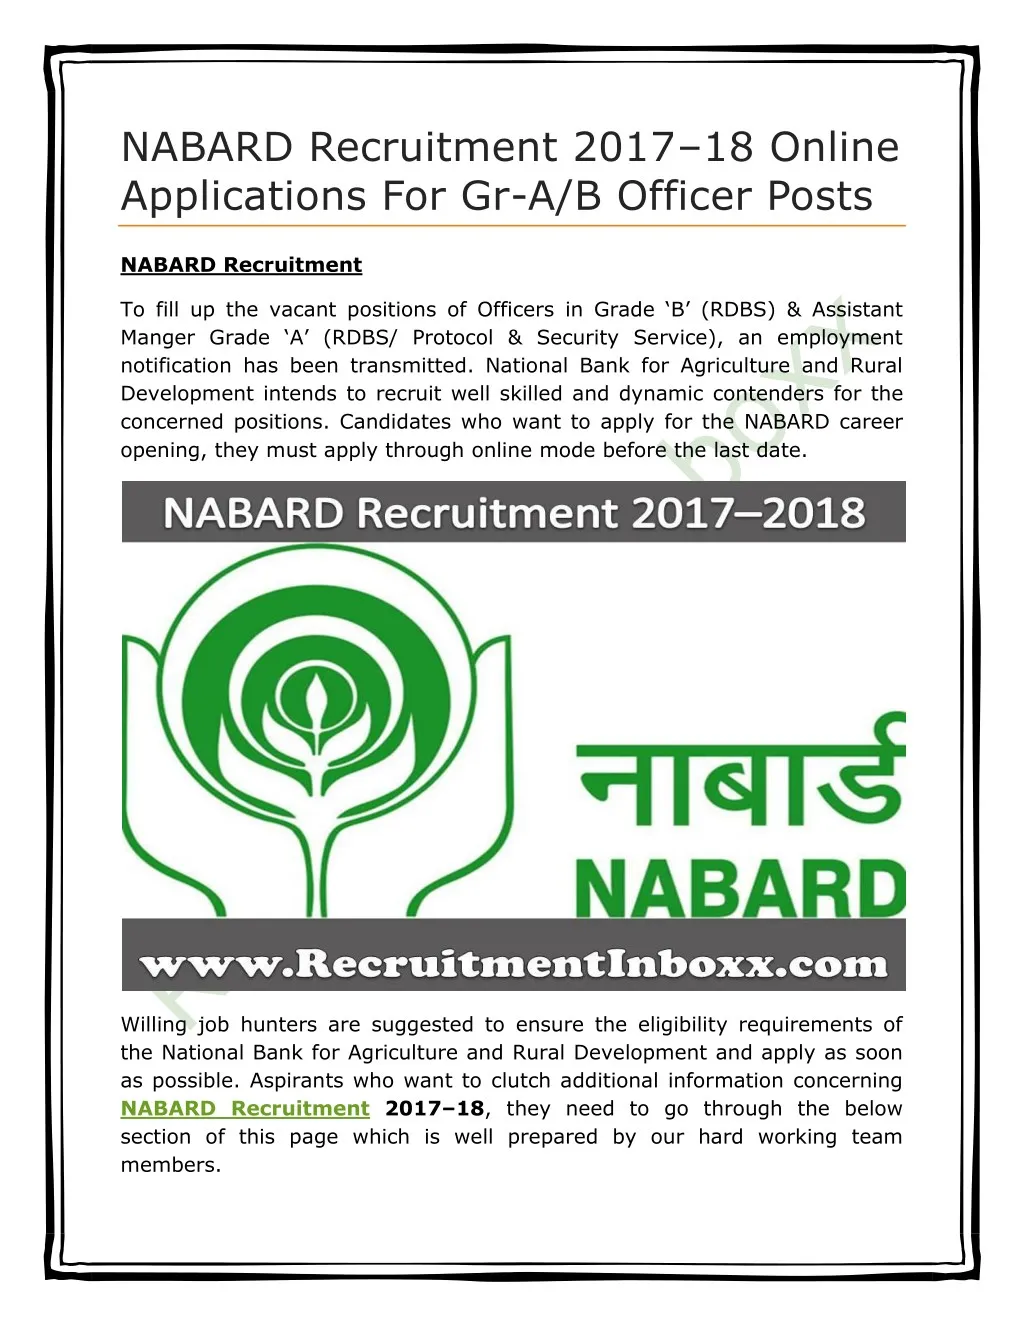 nabard recruitment 2017 18 online applications